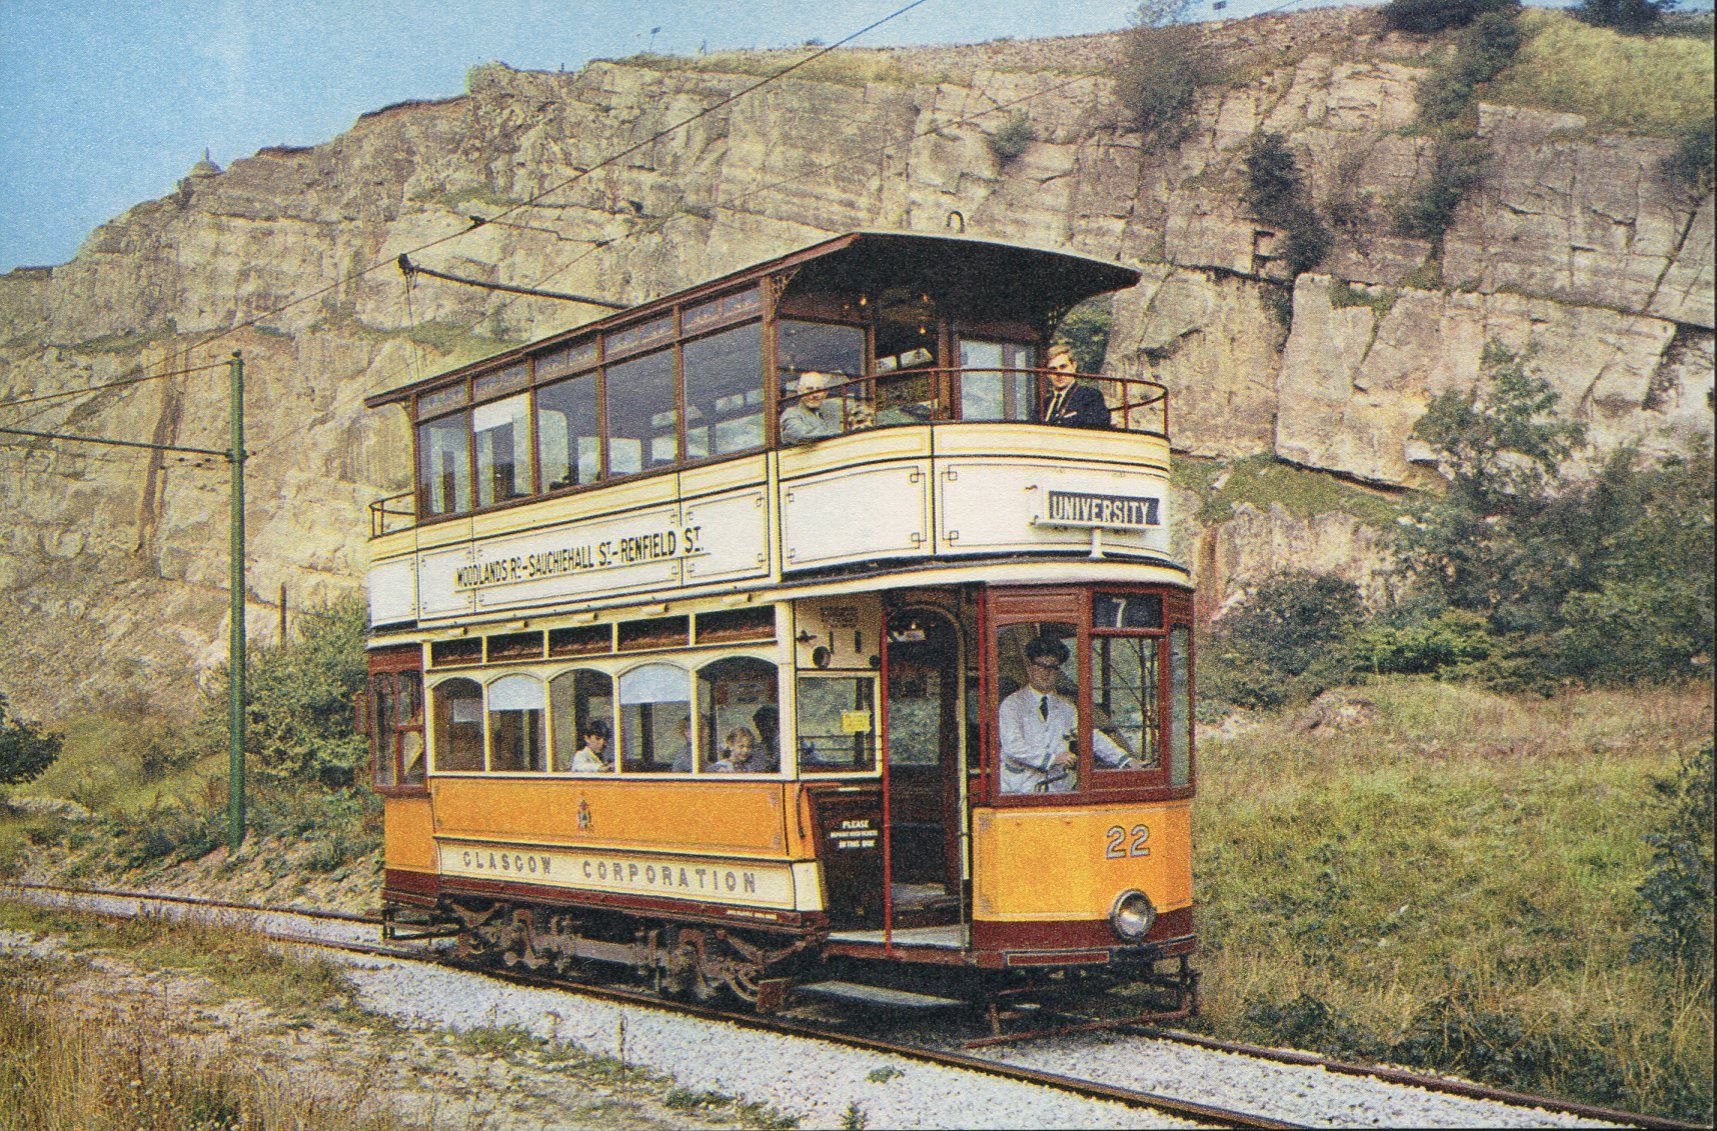 Glasgow Corporation tramcar built 1922